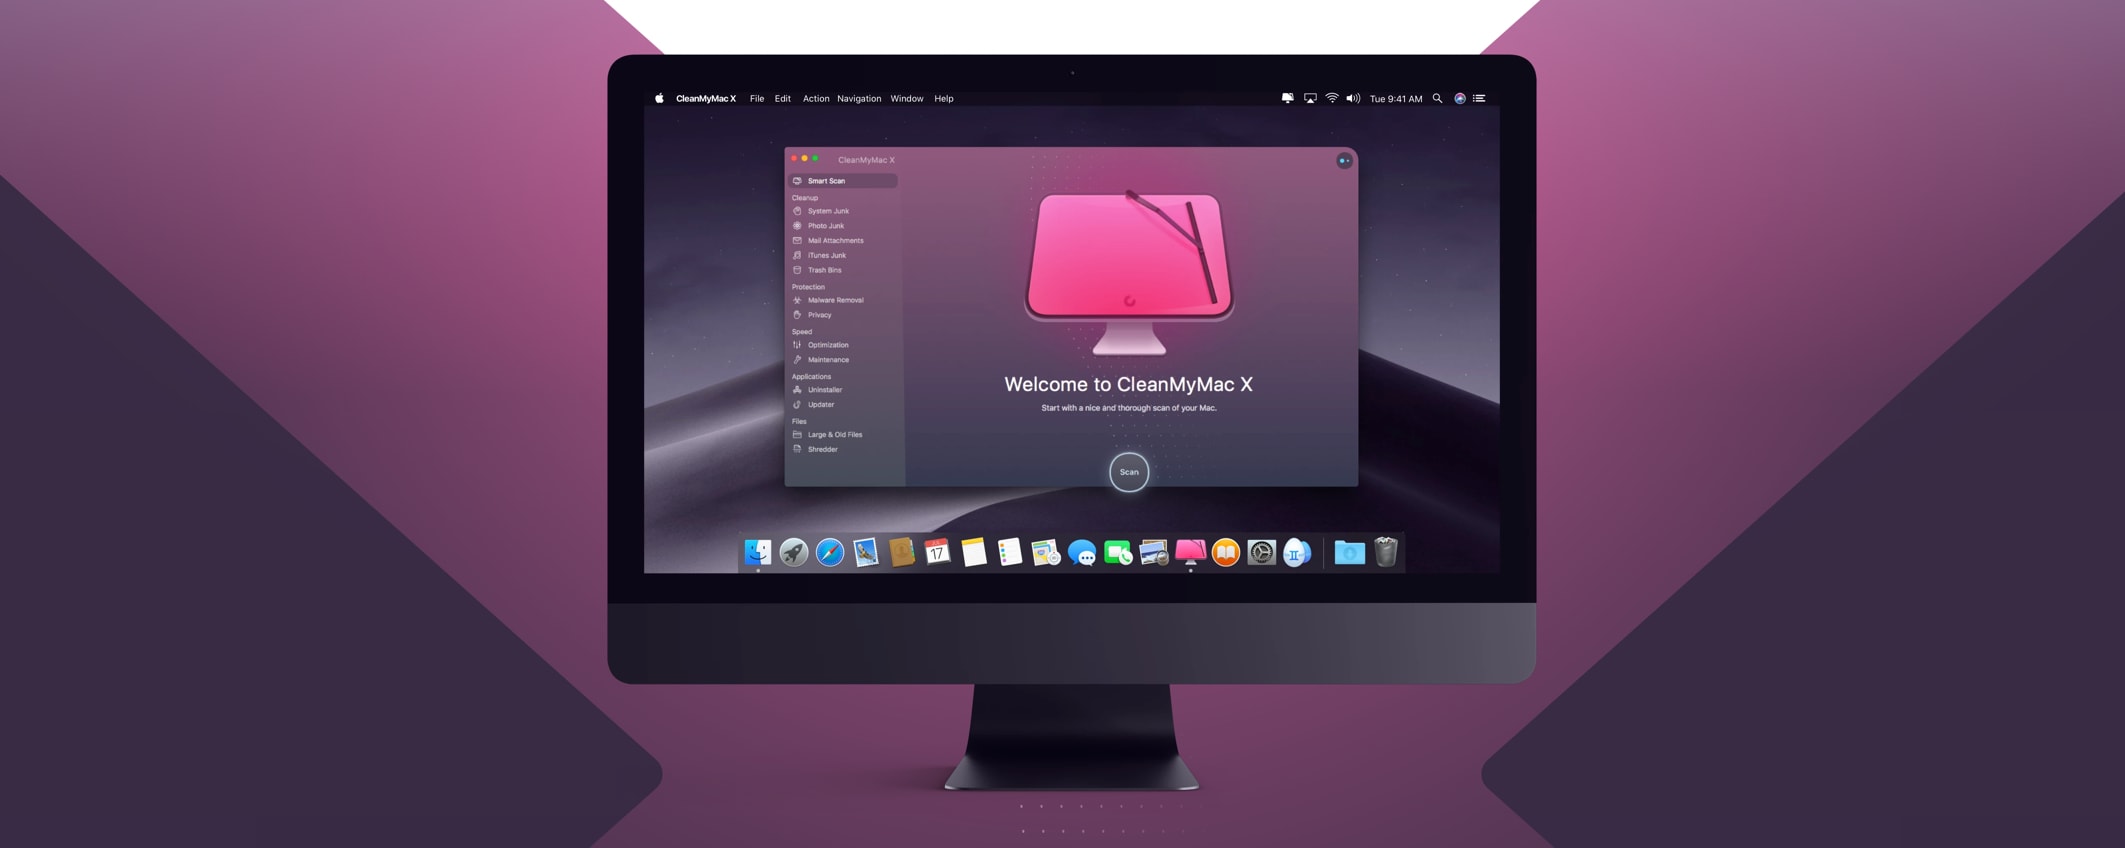 Mac cleaner app store